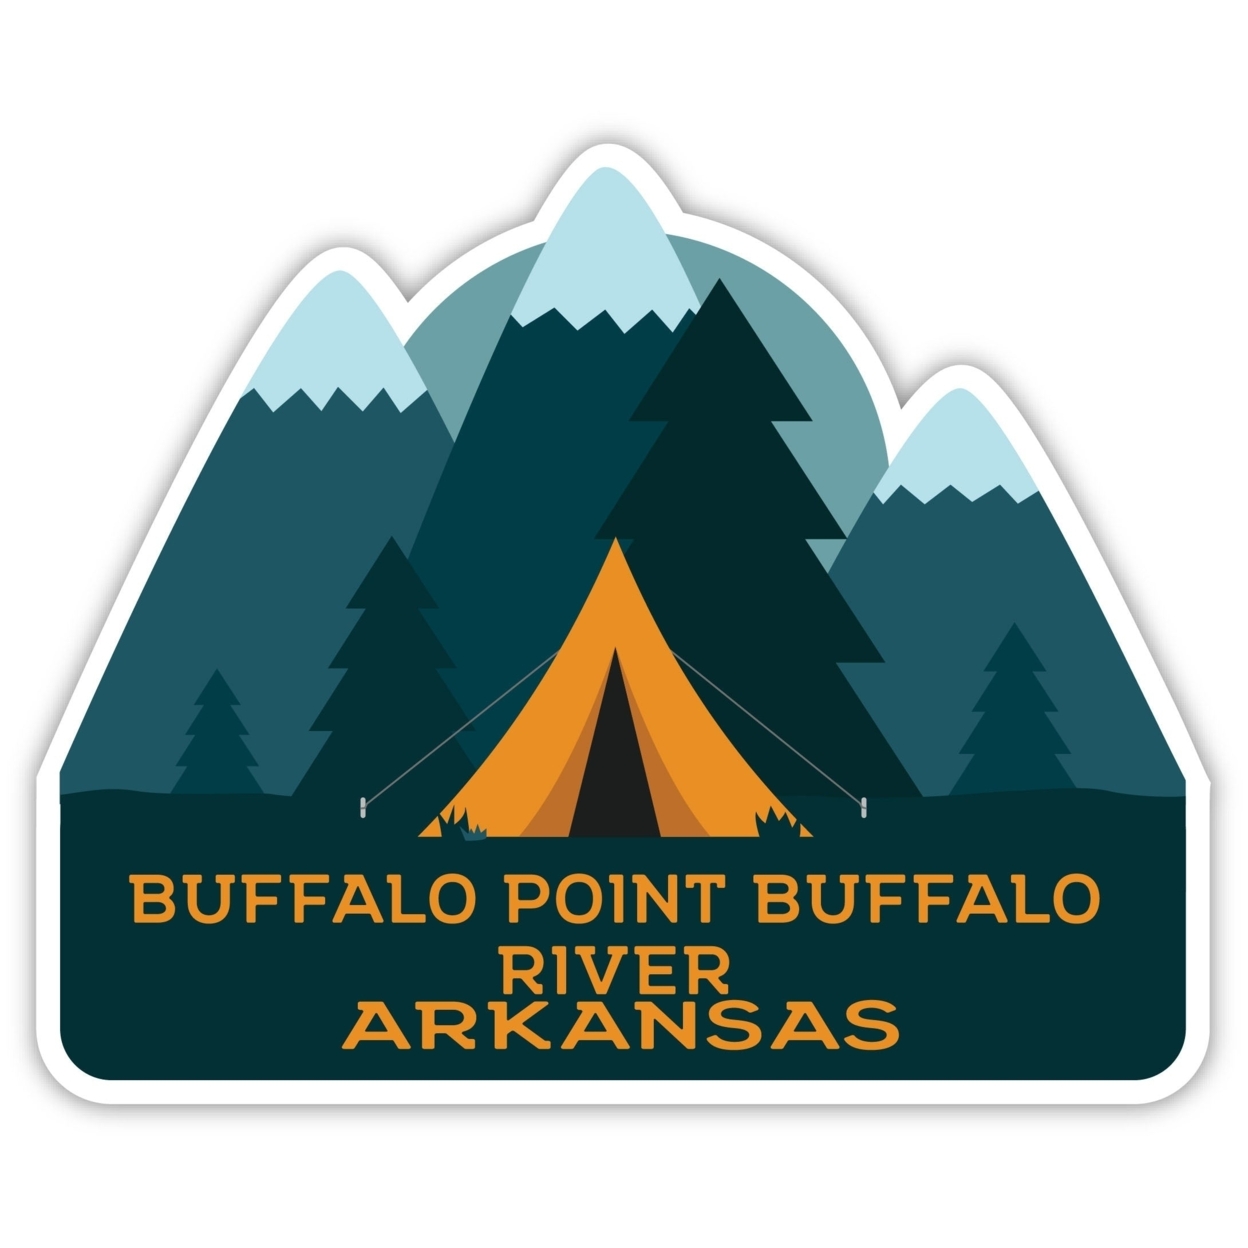 Buffalo Point Buffalo River Arkansas Souvenir Decorative Stickers (Choose Theme And Size) - 4-Pack, 10-Inch, Tent